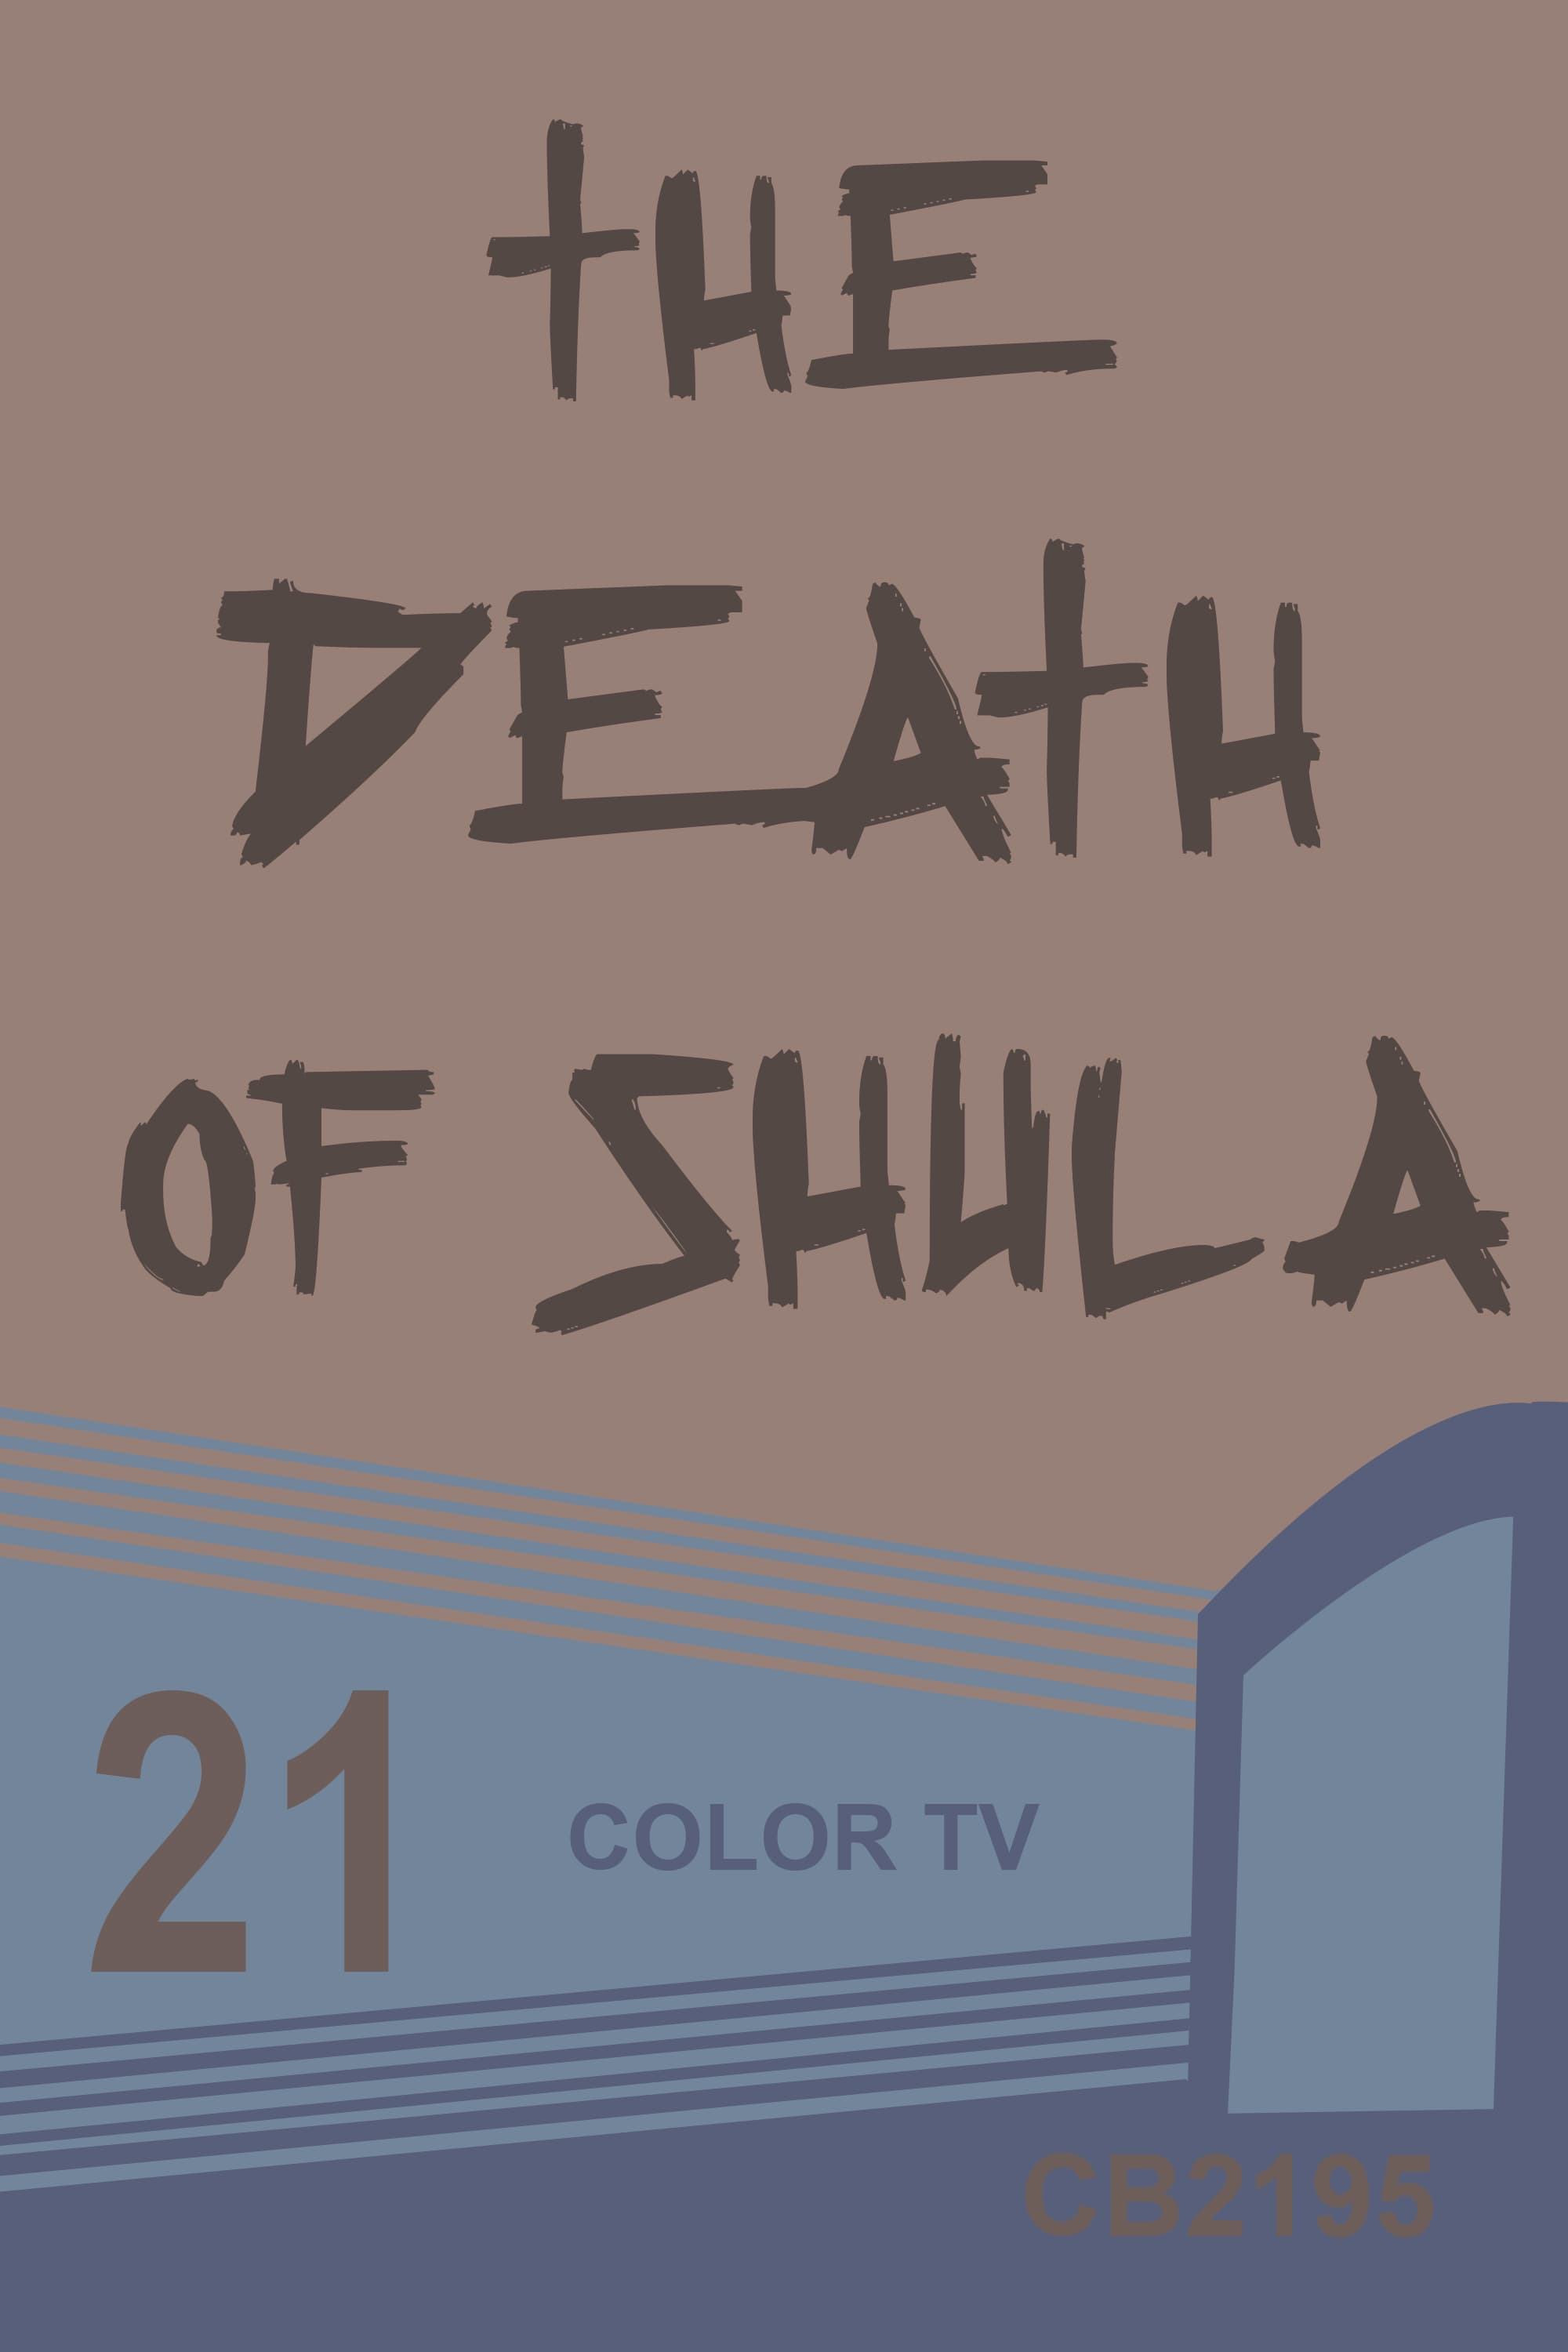 Death of Shula